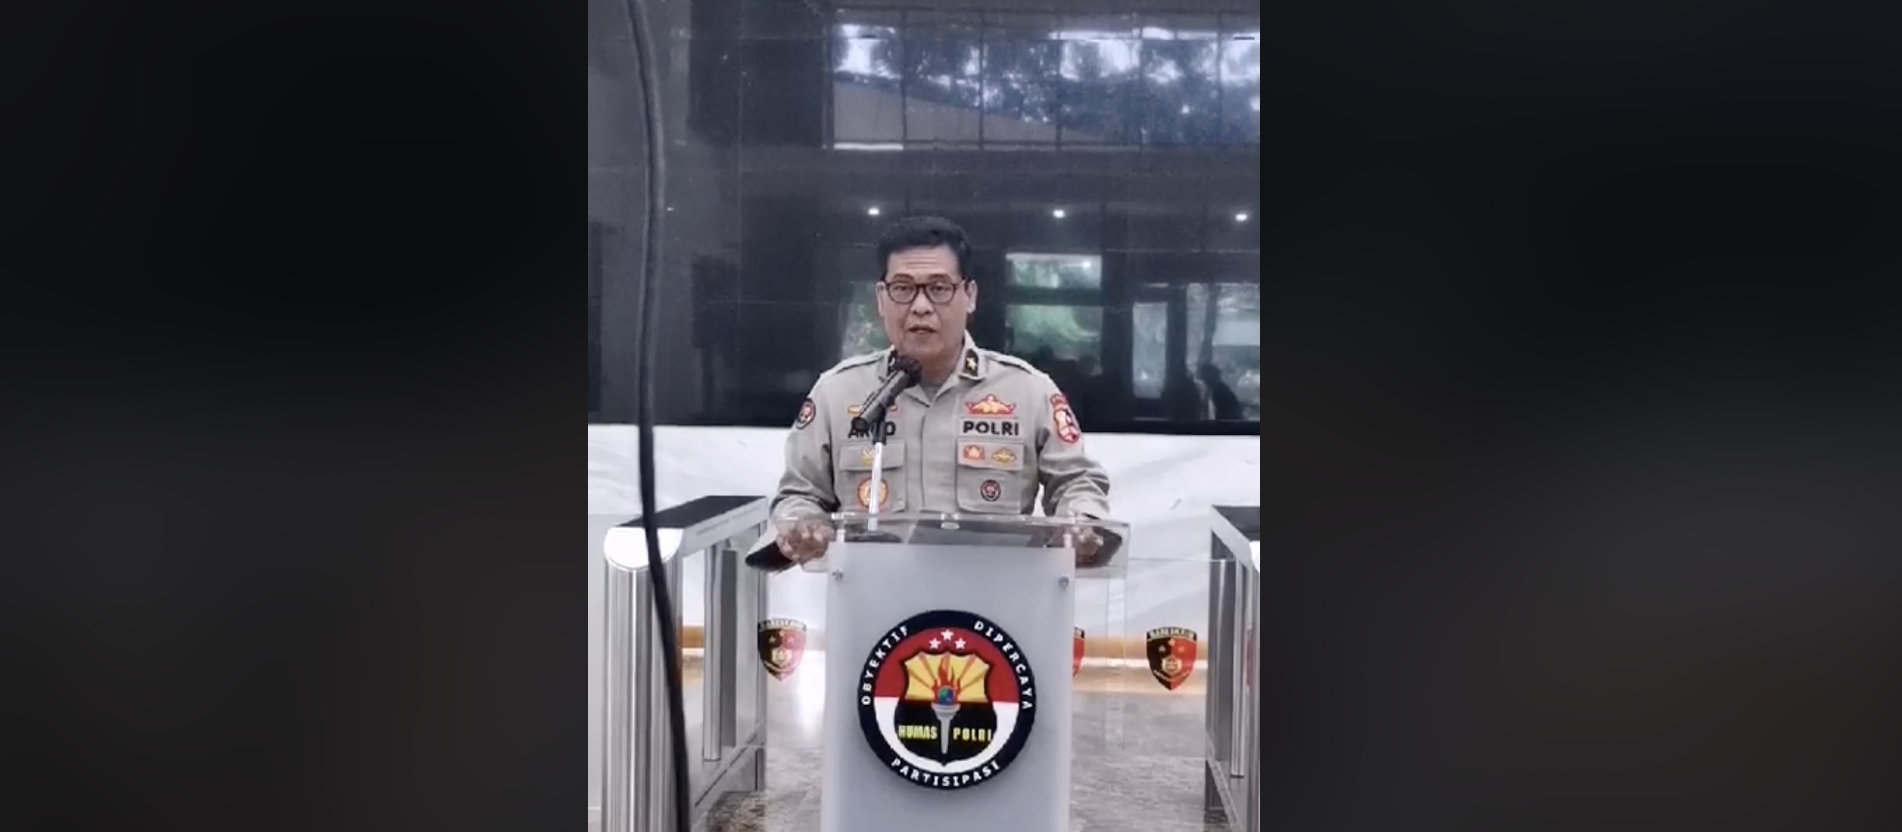 Indonesia’s National Police Spokesman Argo Yuwono via live press conference on April 14, 2020. Photo: Facebook screengrab